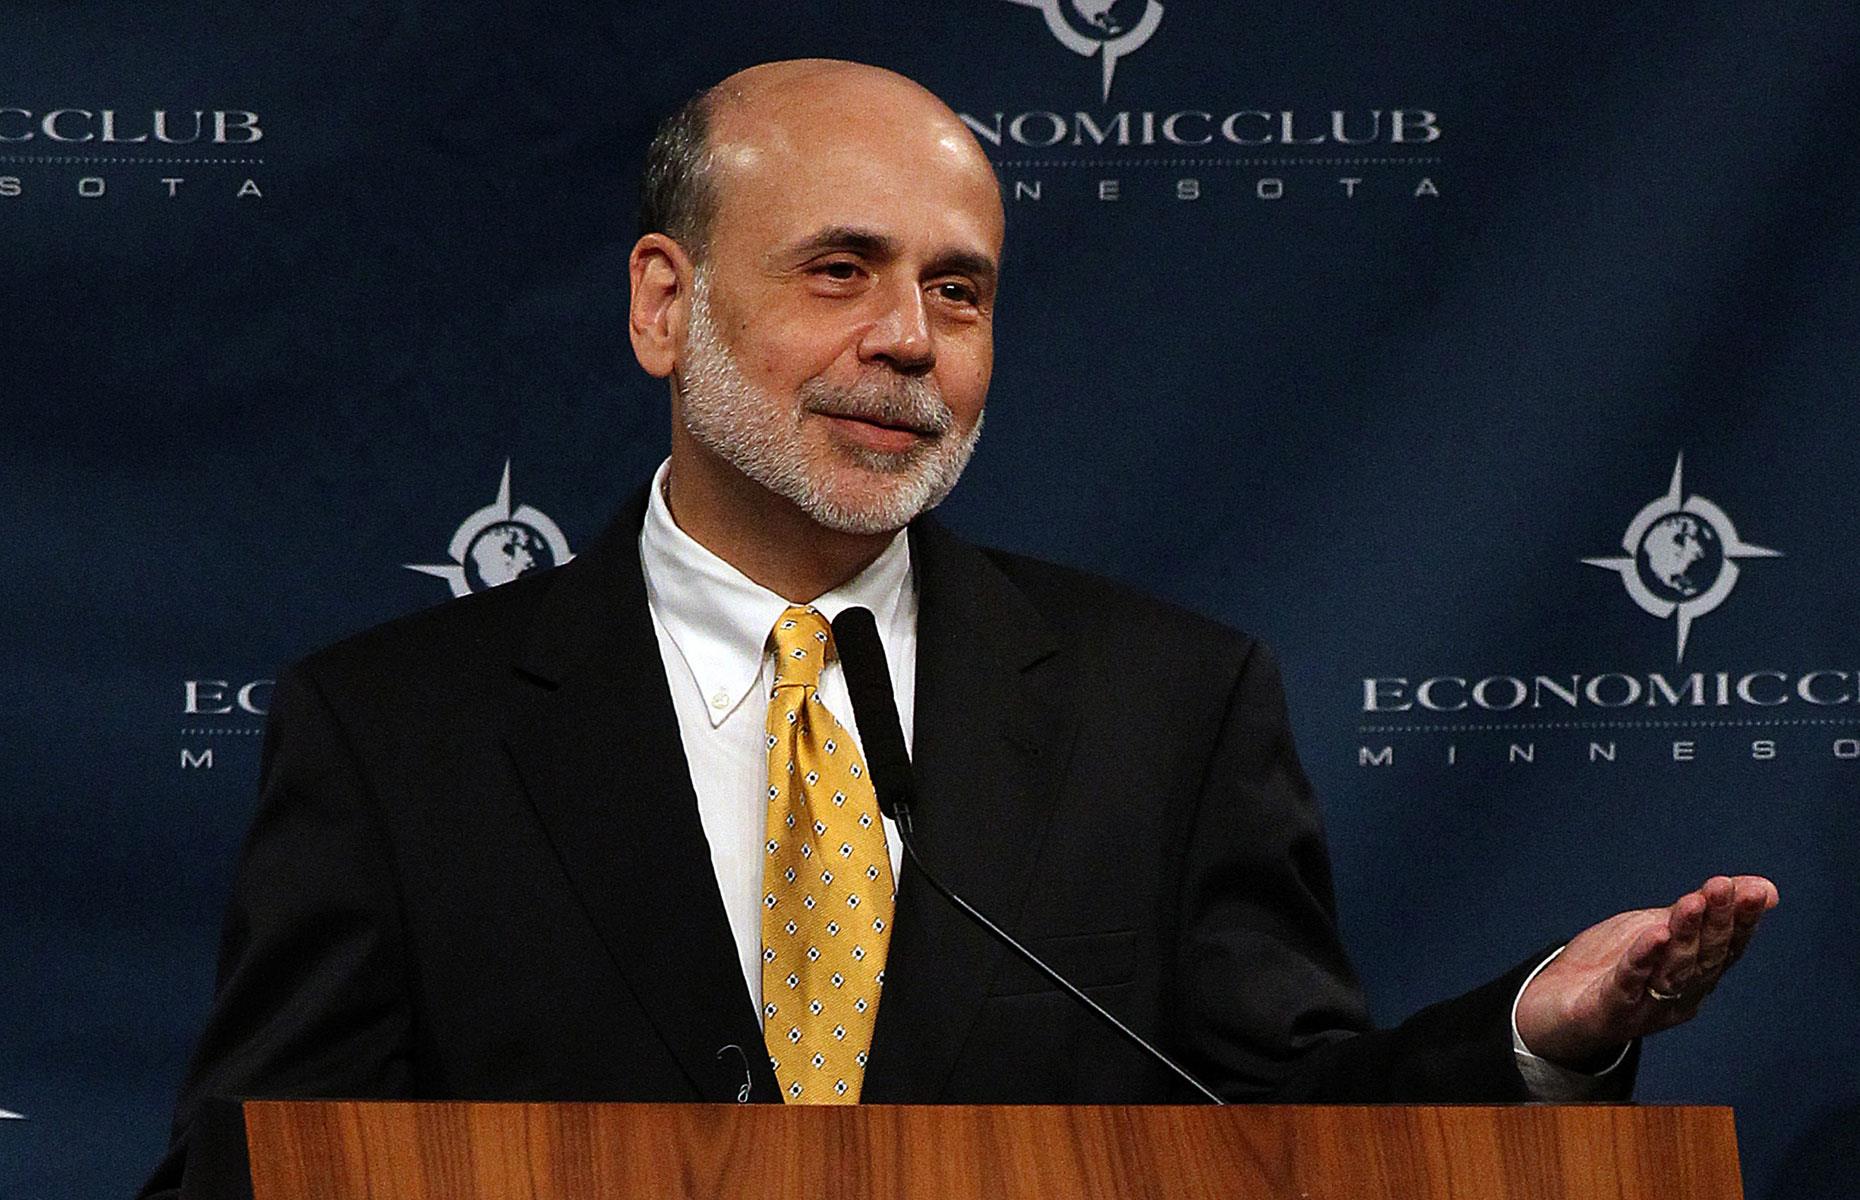 Ben Bernanke: up to $400,000 (£241.8k) per speech